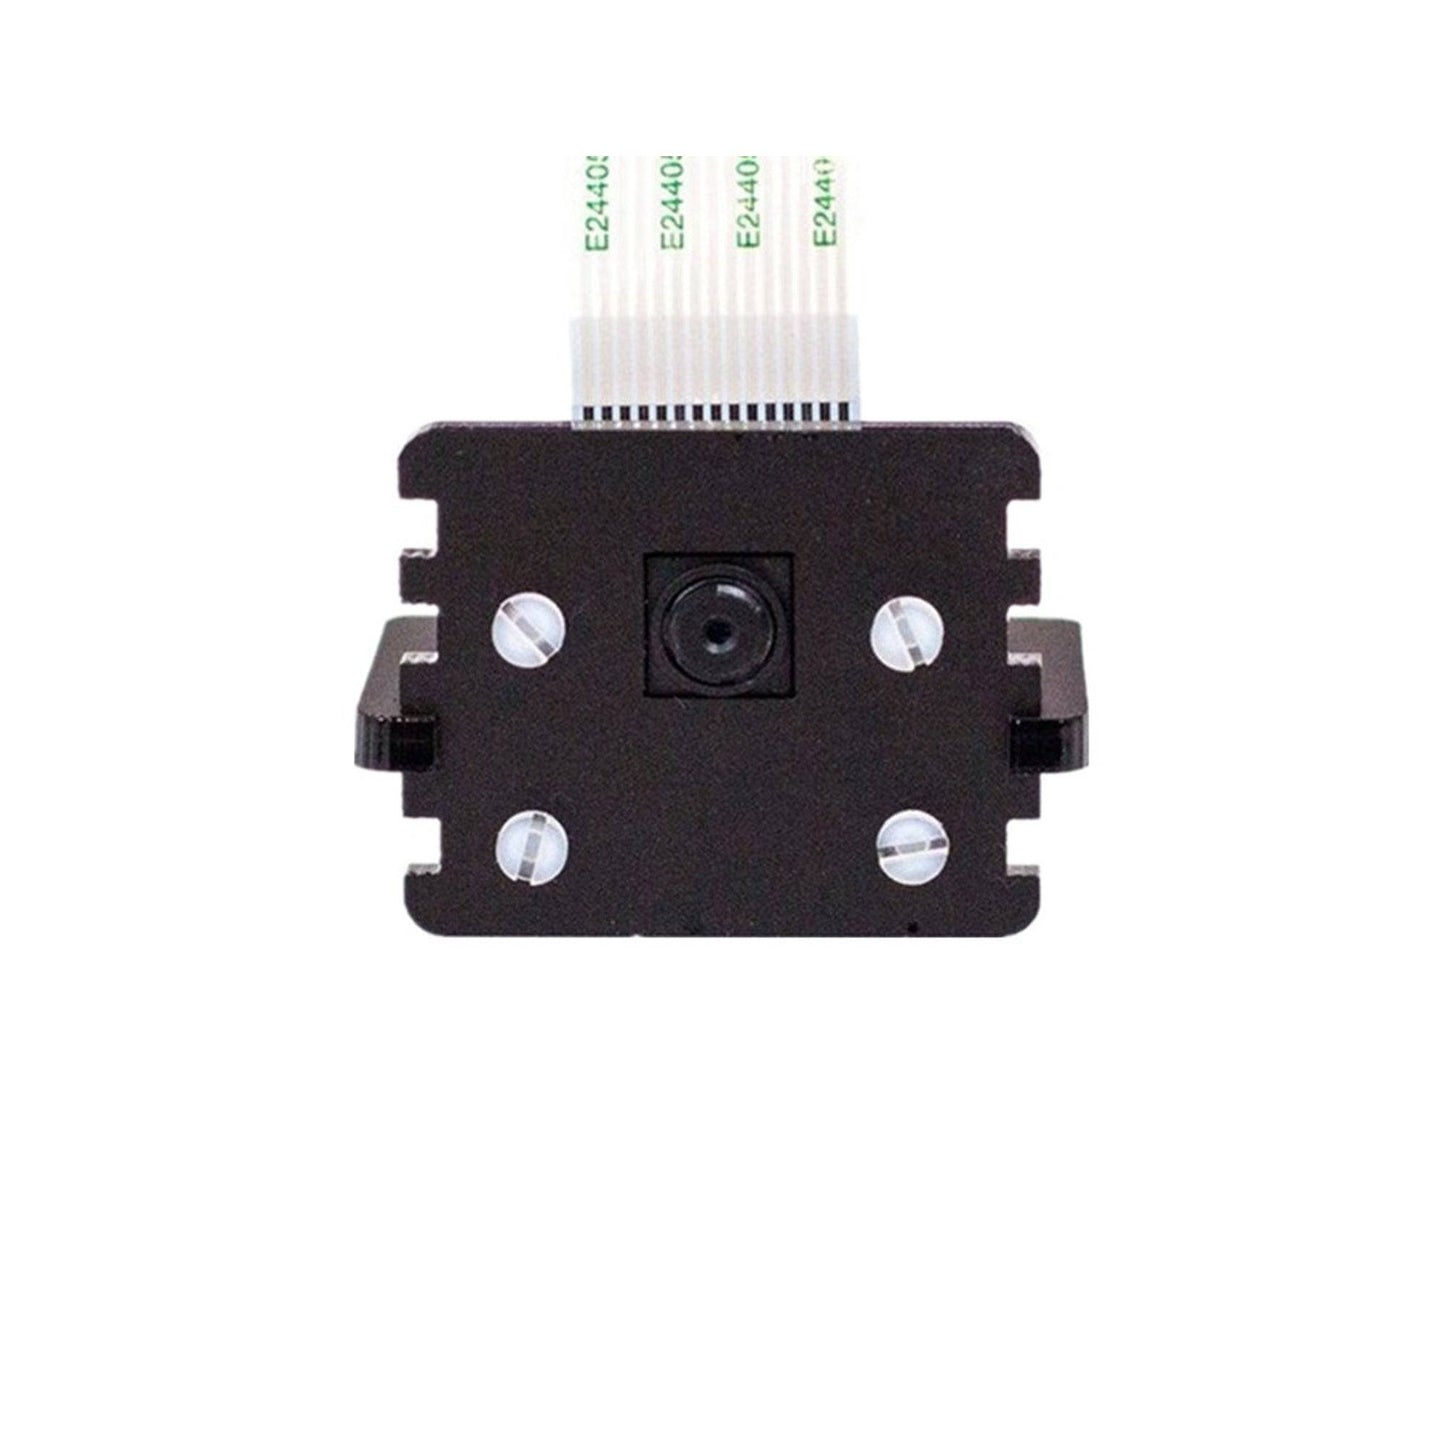 Raspberry Pi Camera Module Mount Acrylic Adjustable